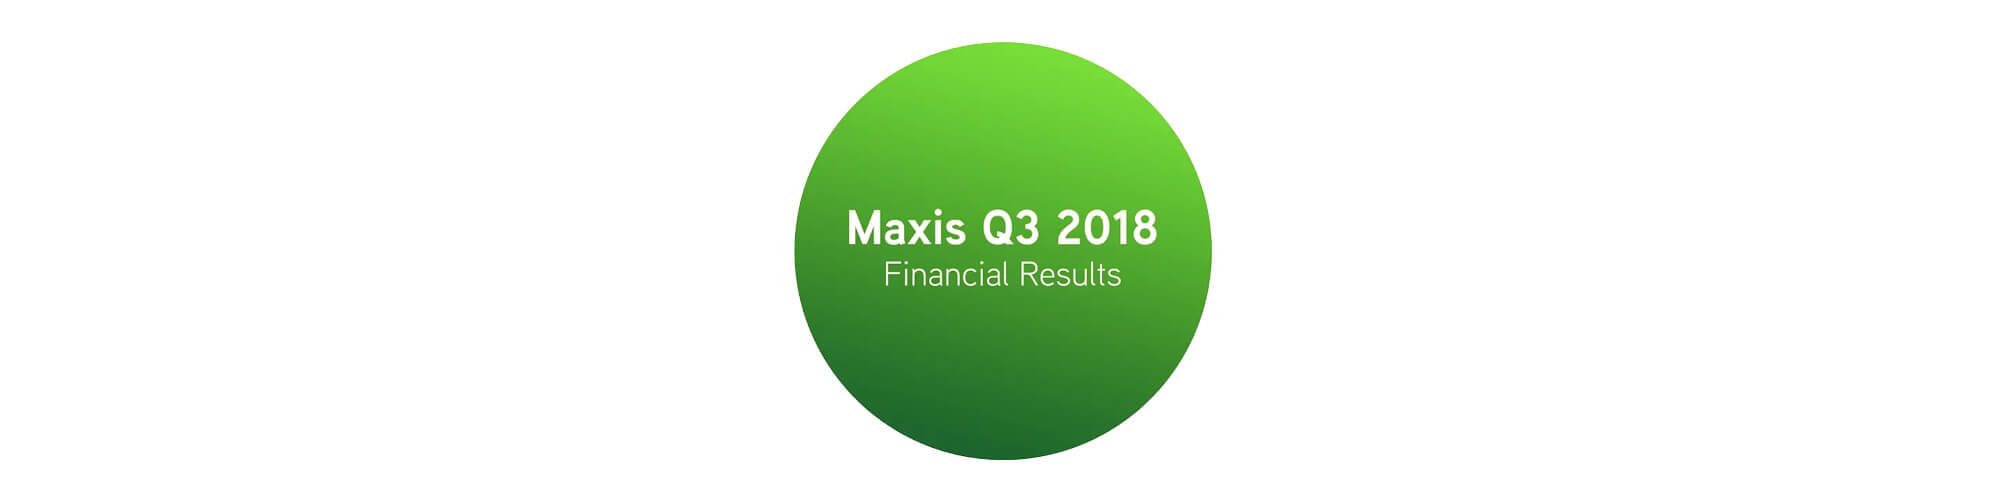 Maxis Q3 2018